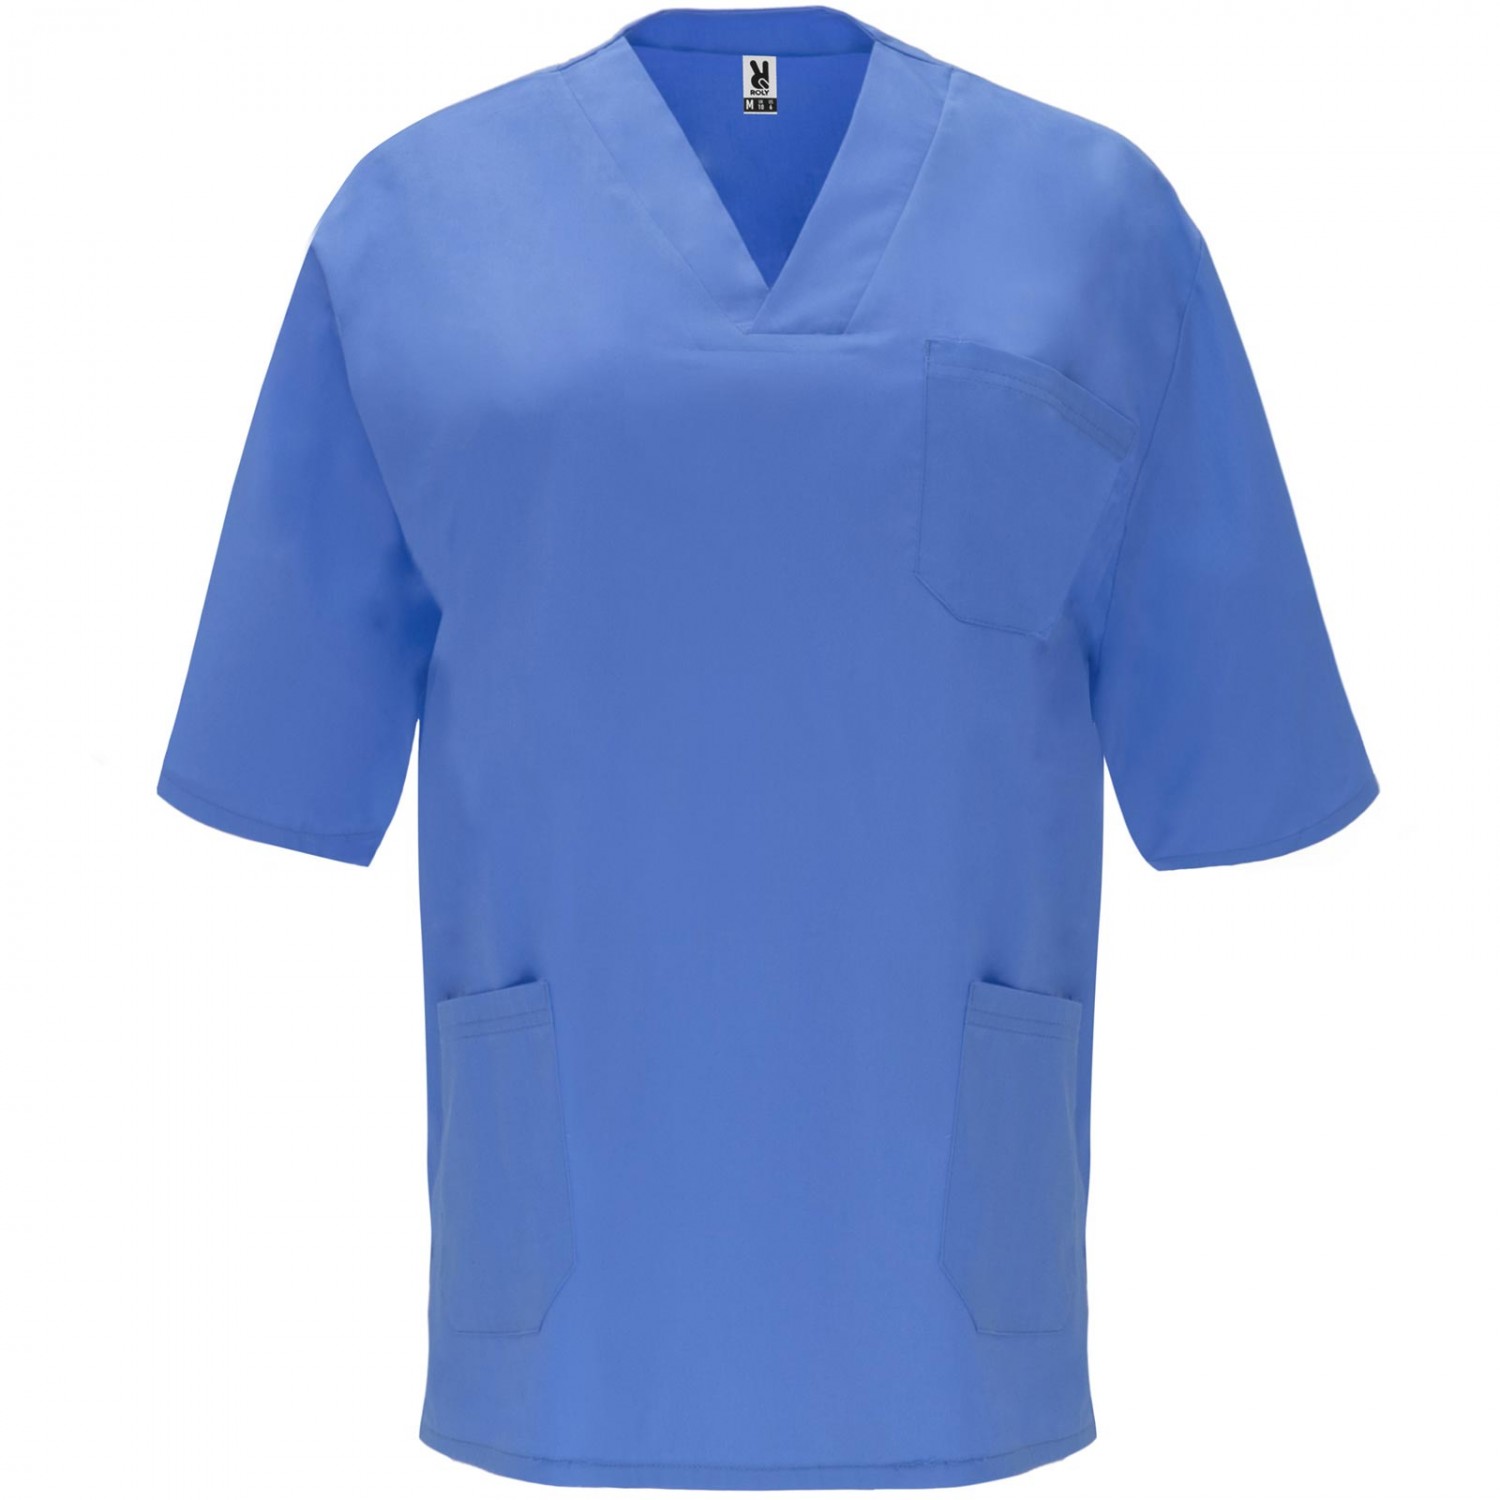 Schlupfkasack Medizin Pflege Unisex Hemd Jacke (Farbe: OP-blau Größe: L)